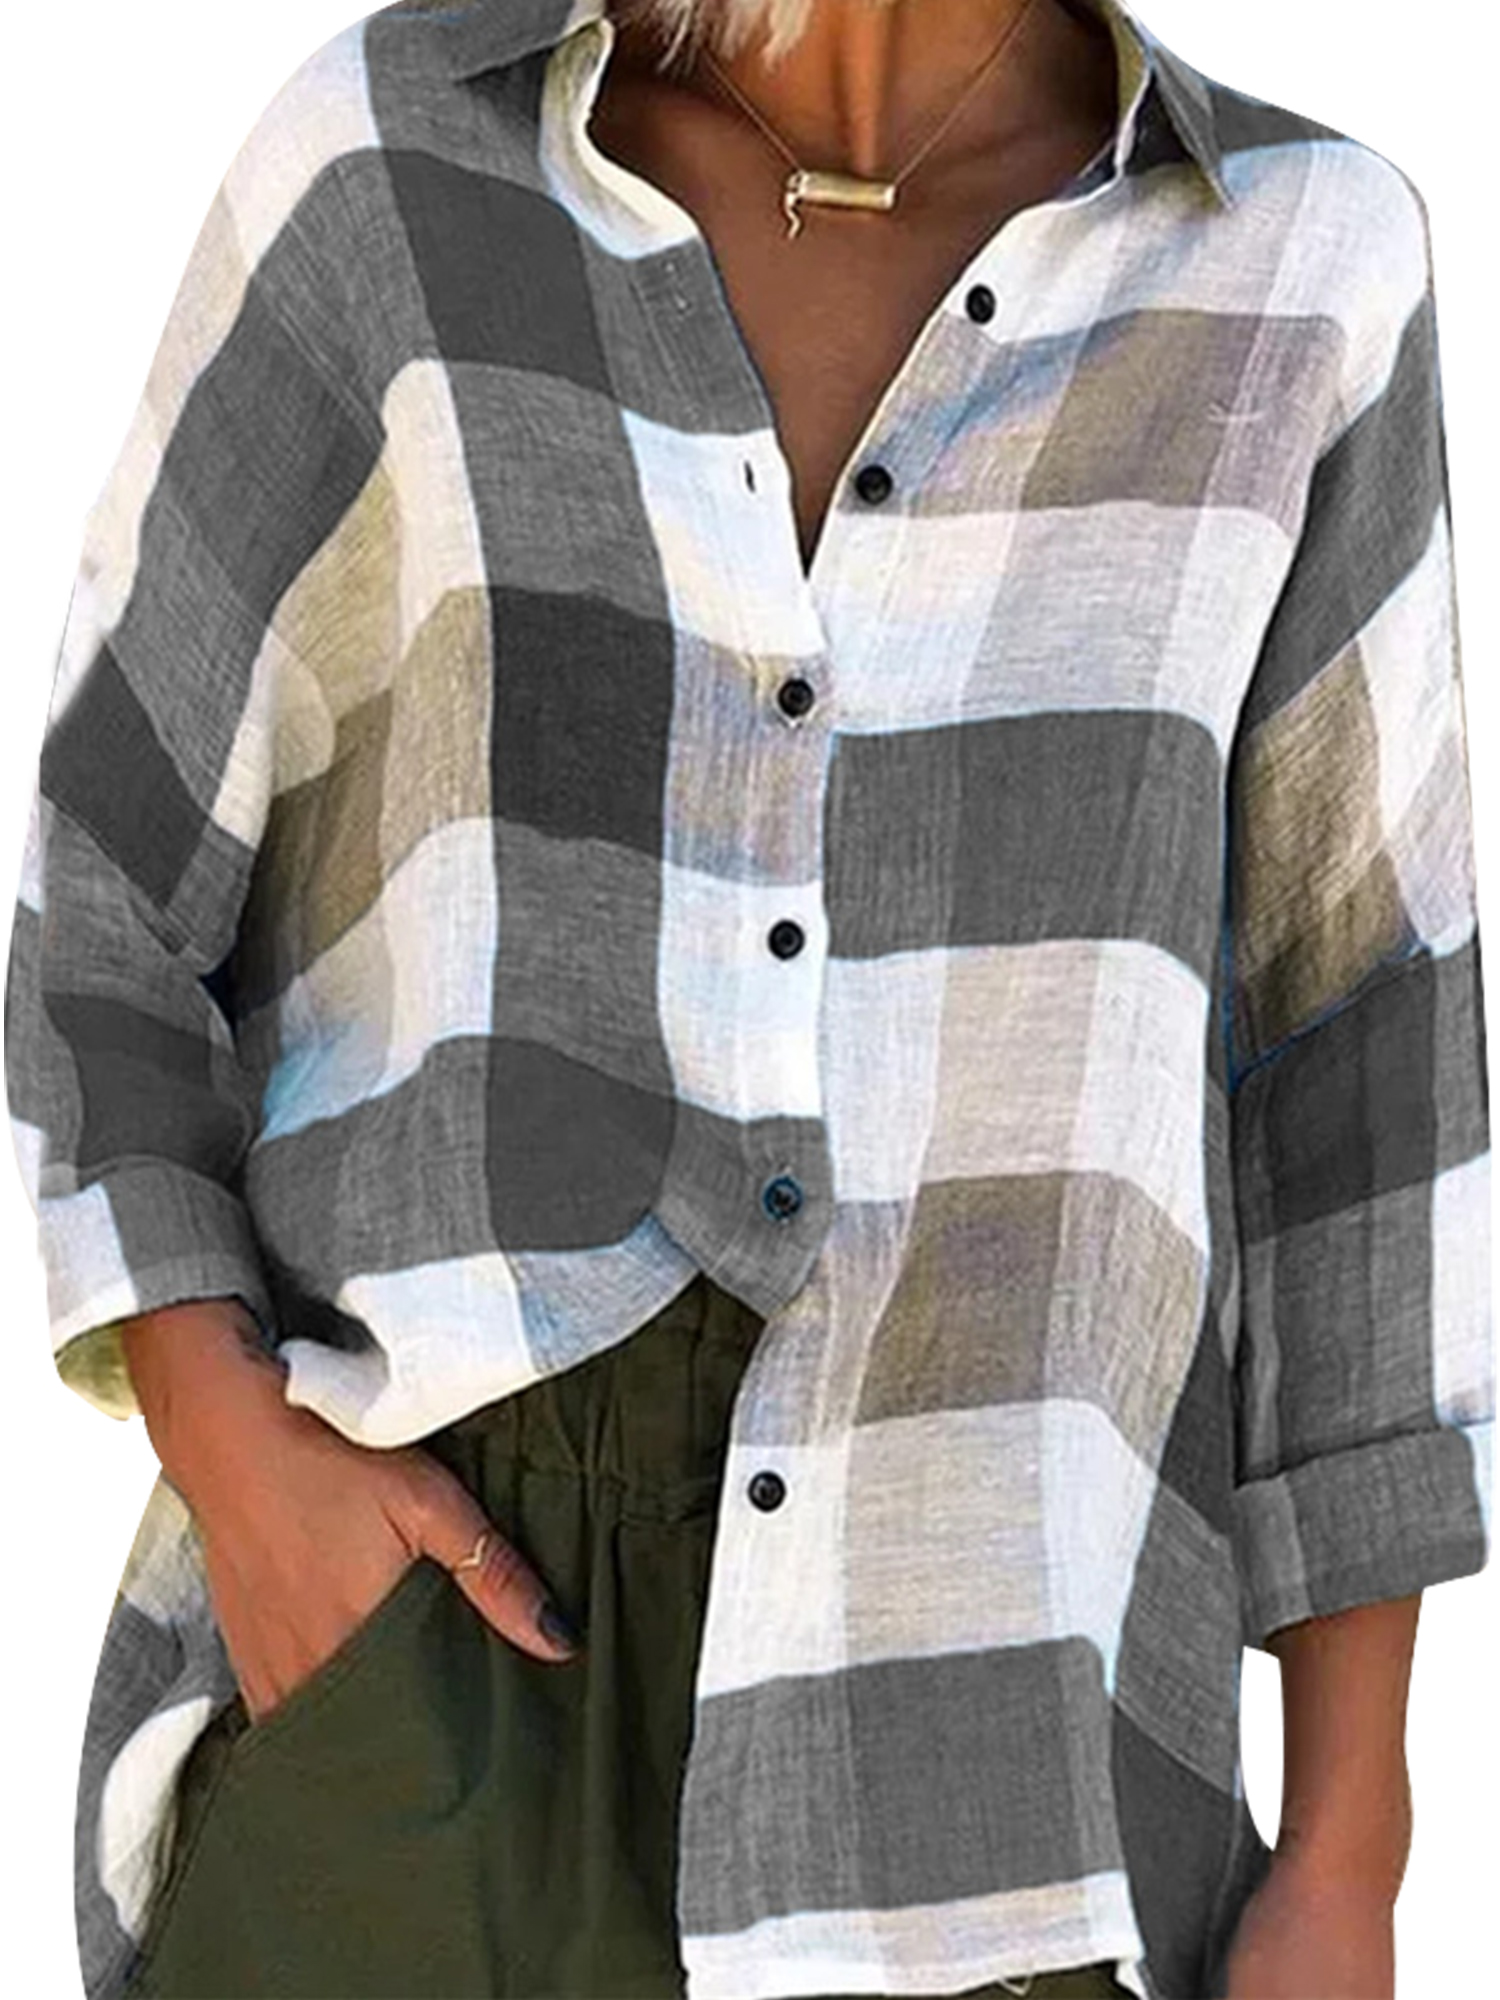 Fashion Printed Women Tops Long Sleeve T Shirt Lady Casual Button Blouse Shirts